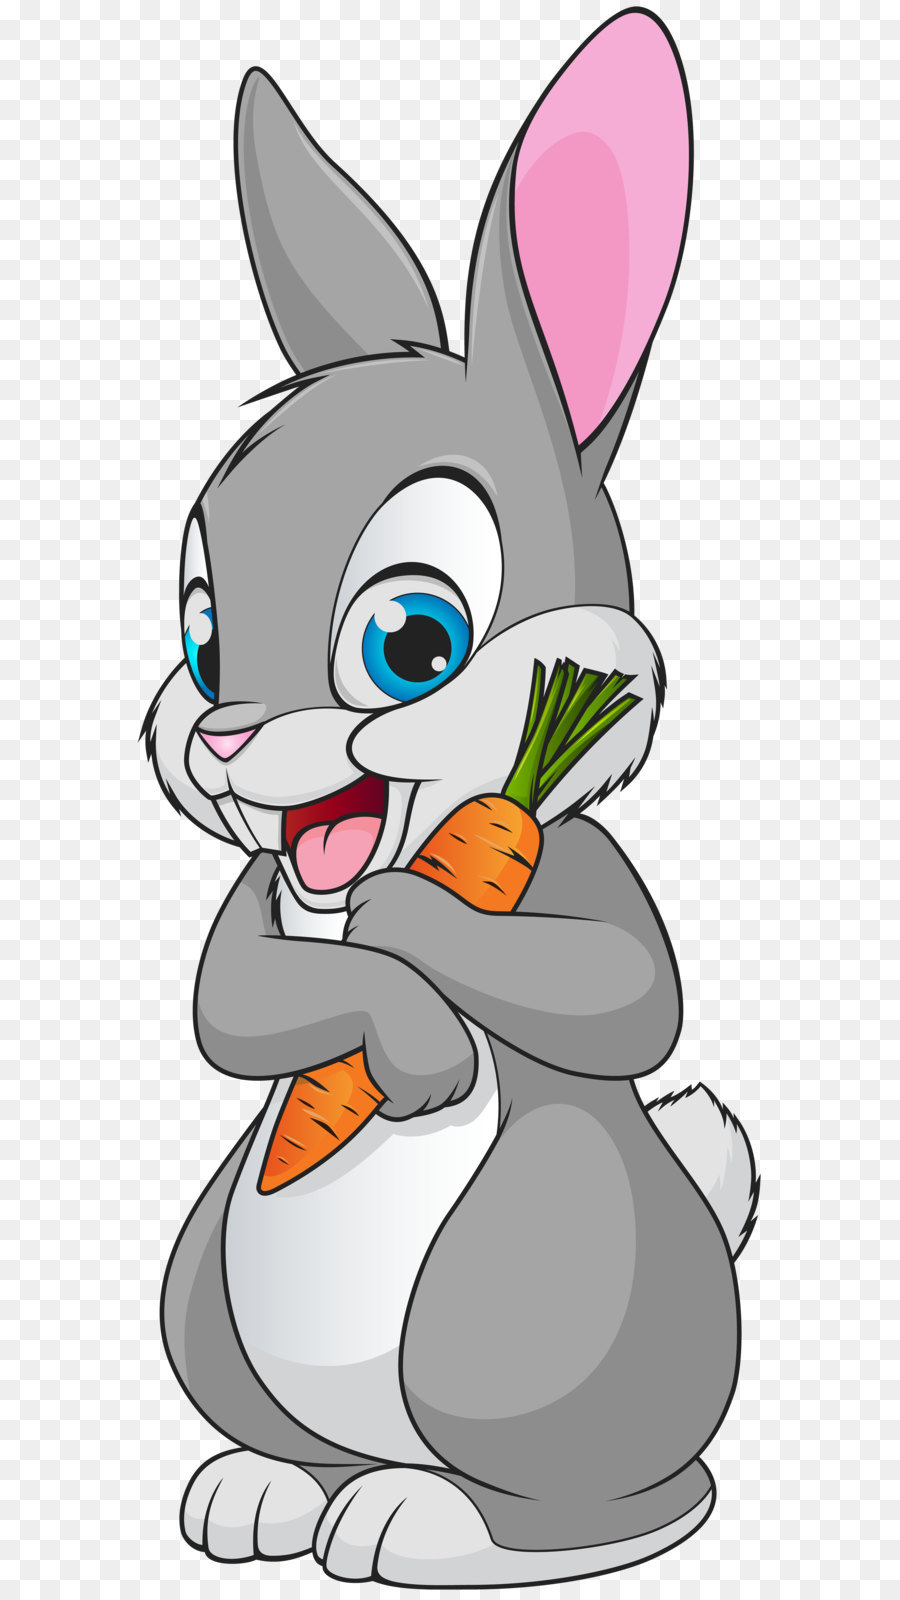 Bugs Bunny Rabbit Cartoon Clip art - Cute Bunny Cartoon Transparent